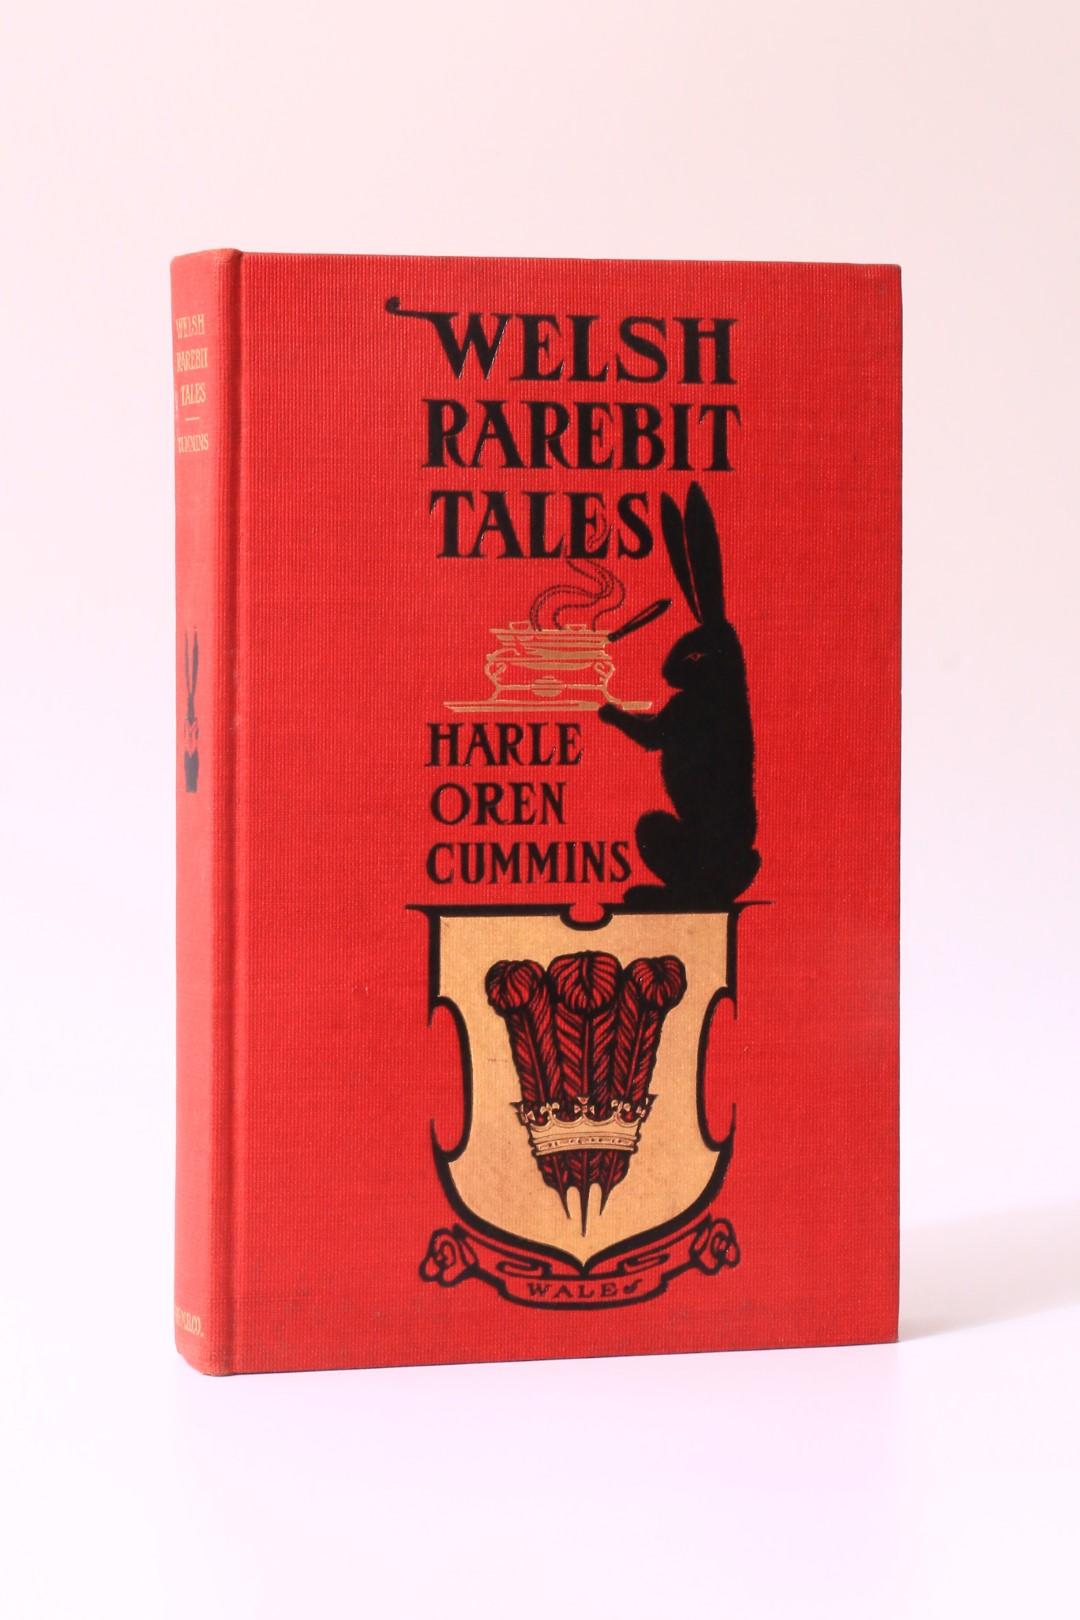 Harle Oren Cummins - Welsh Rarebit Tales - The M.B.CO., 1902, First Edition.